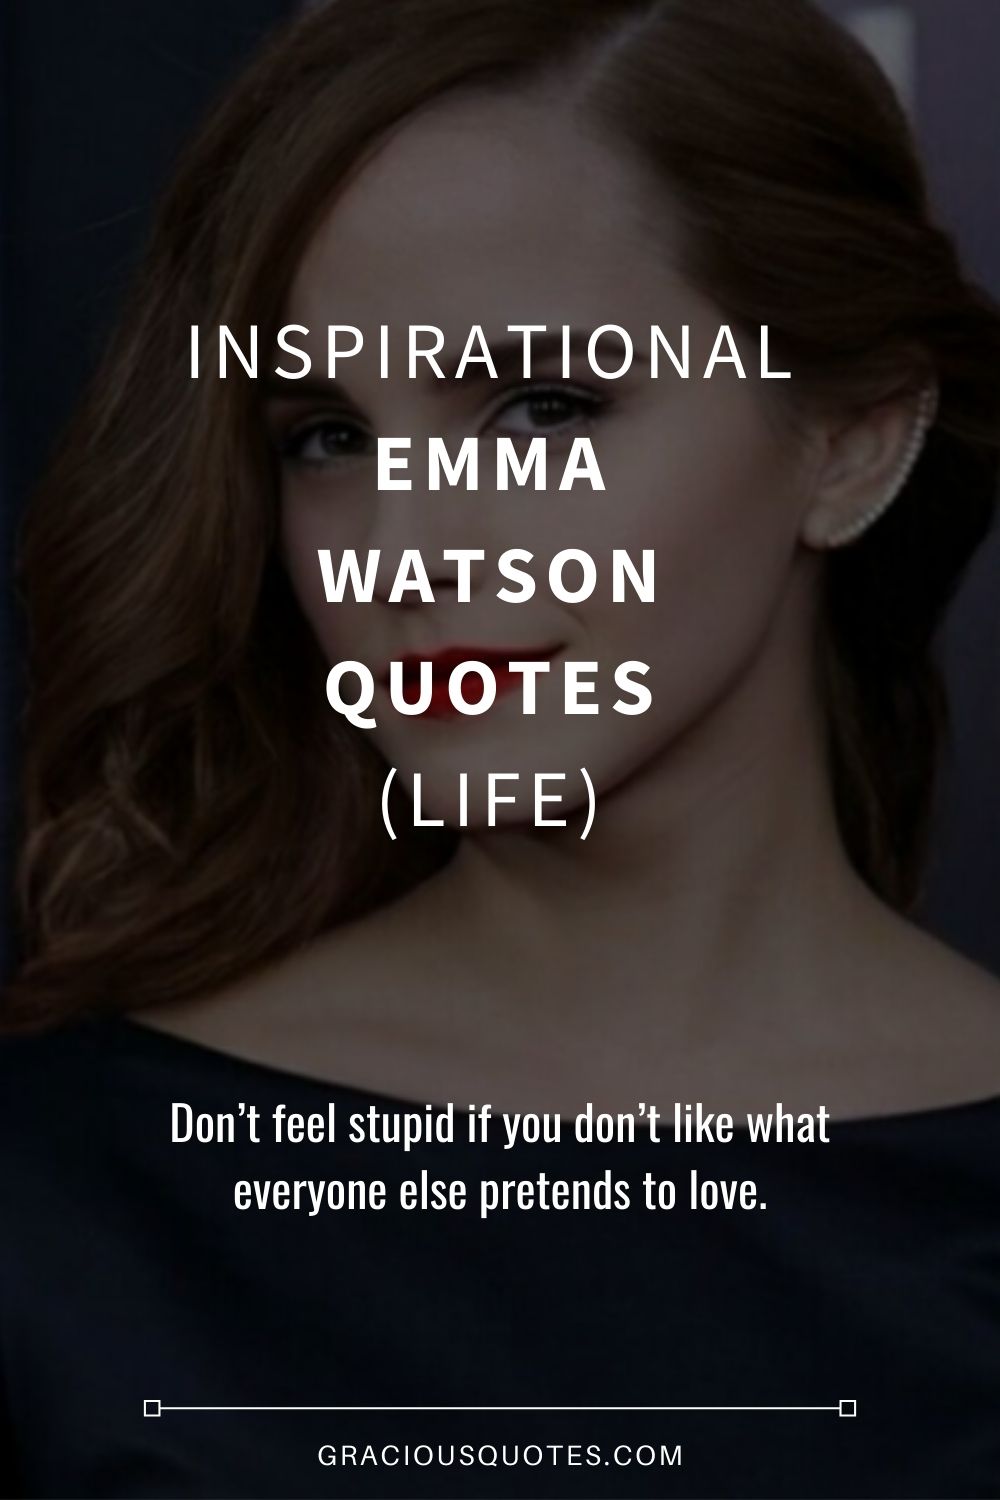 Inspirational Emma Watson Quotes (LIFE) - Gracious Quotes